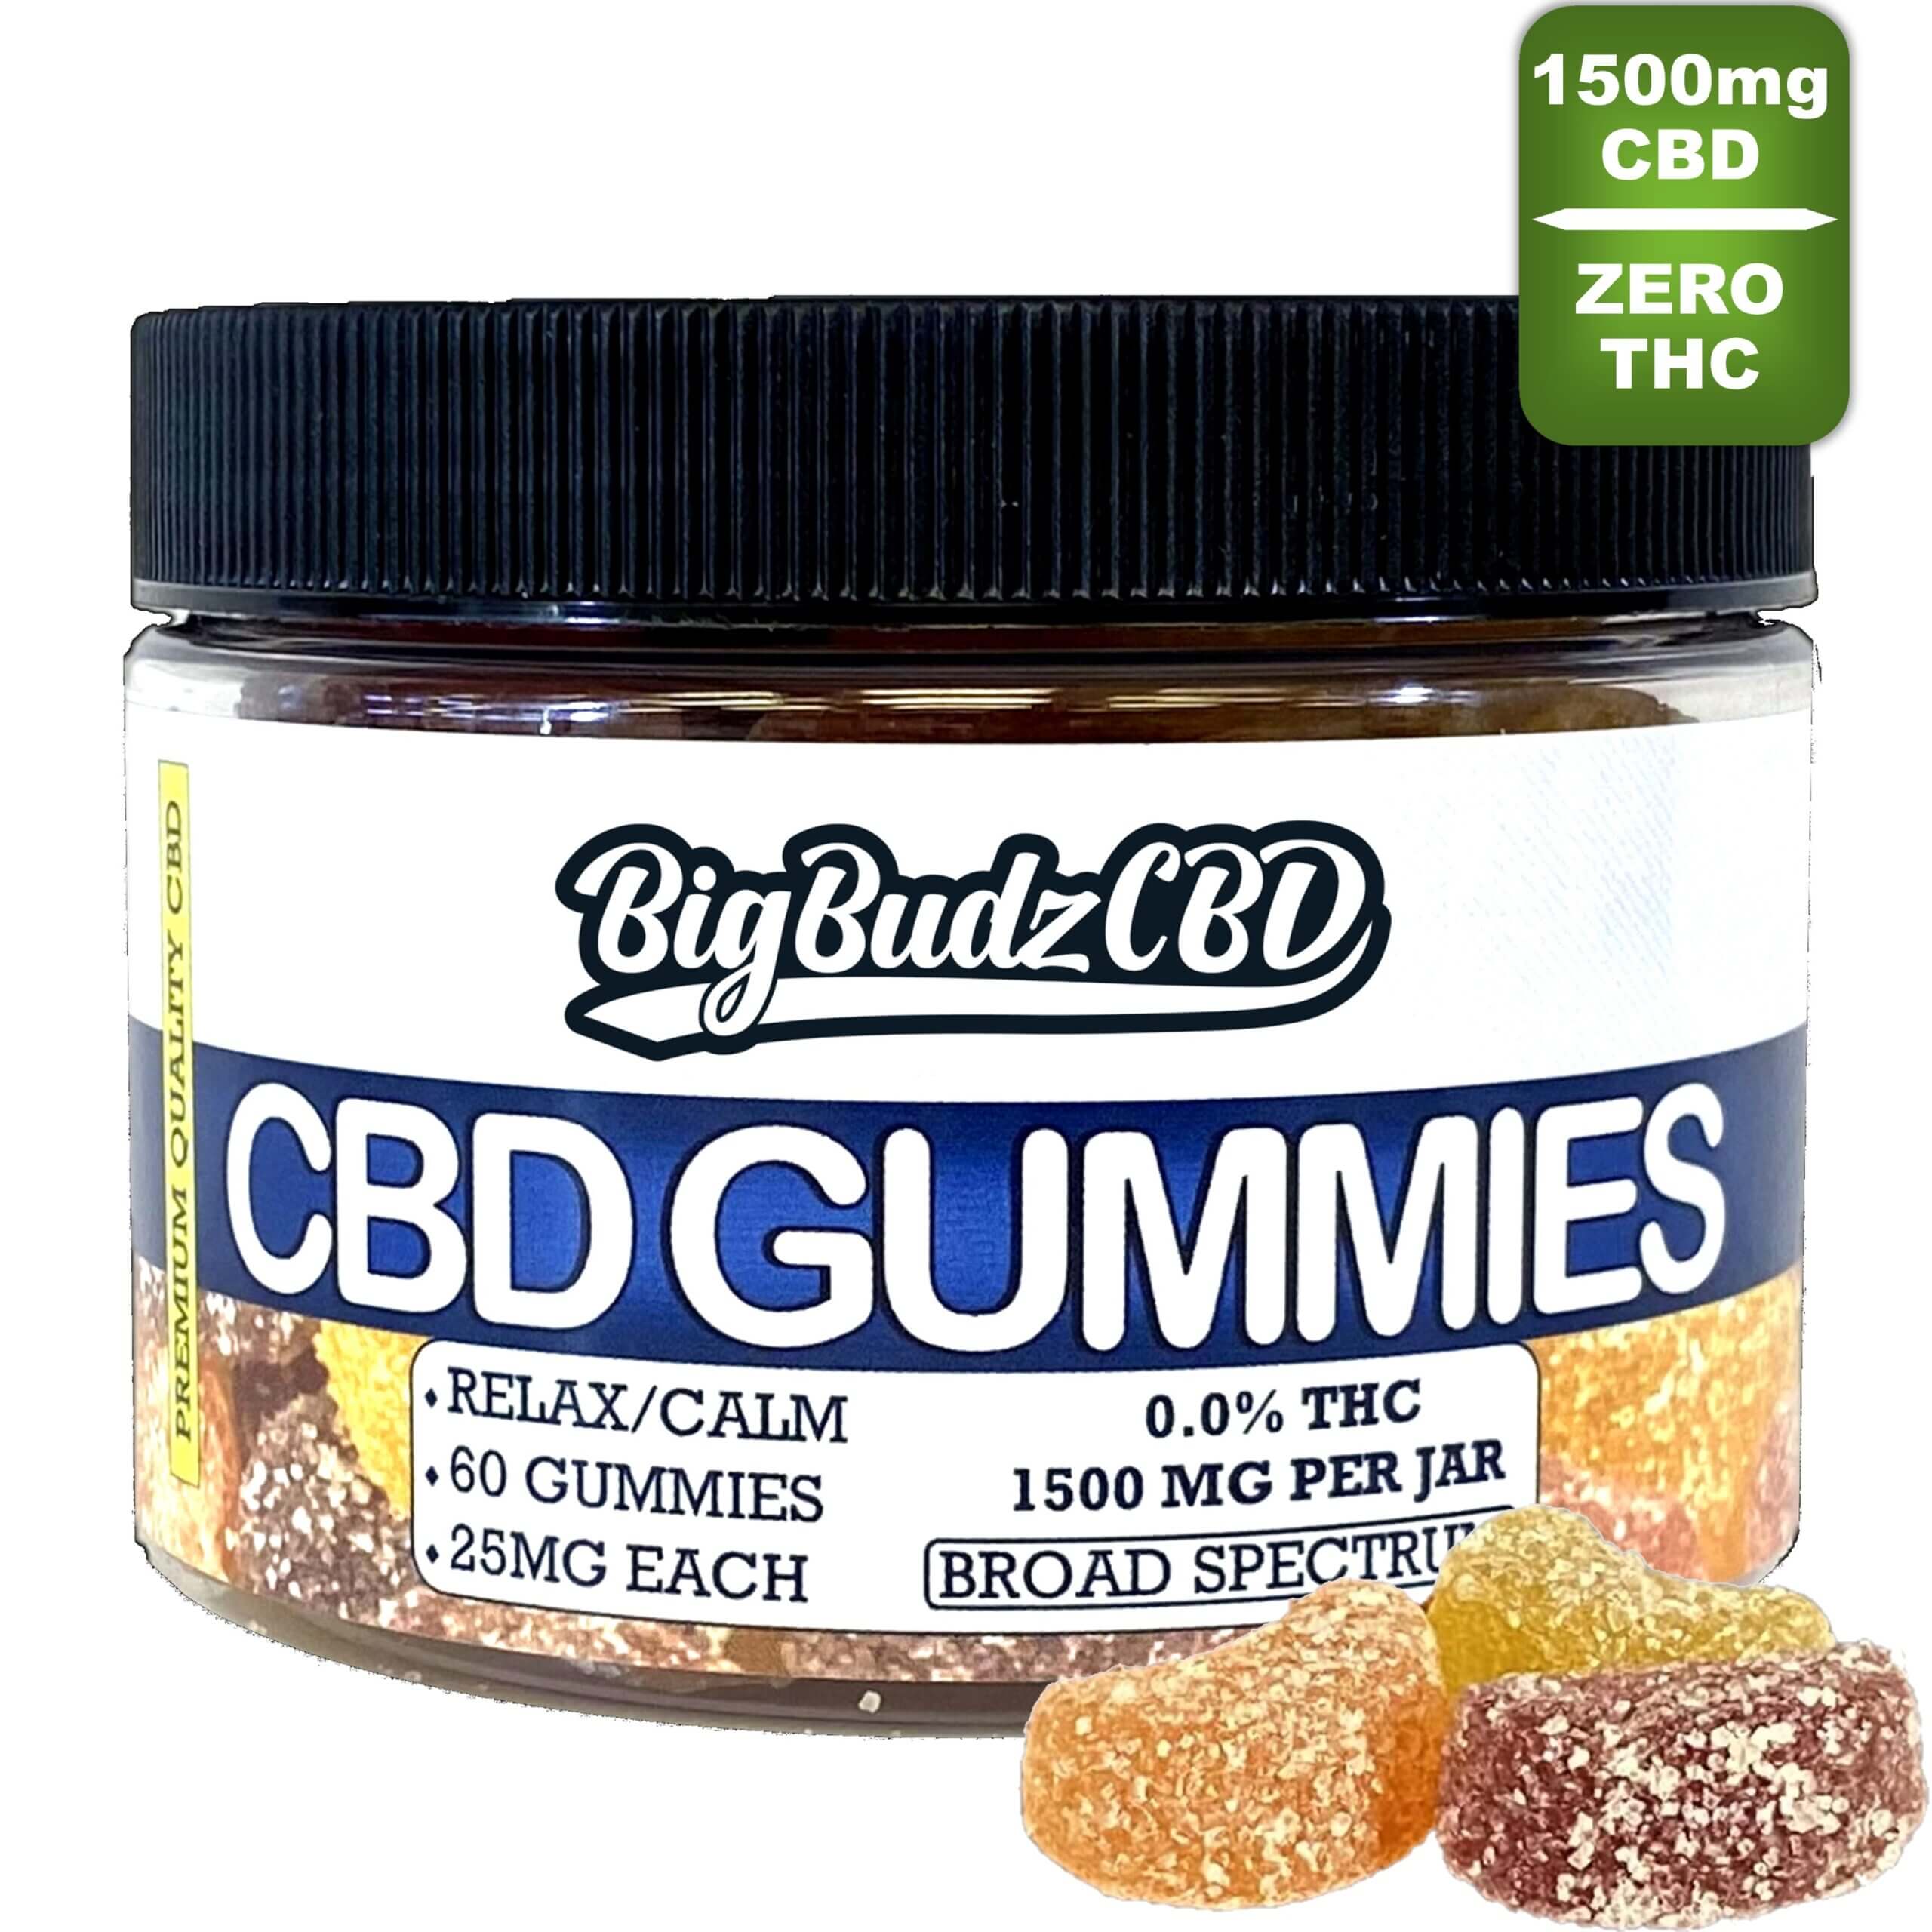 Broad Spectrum CBD Gummies - 25mg each gummy